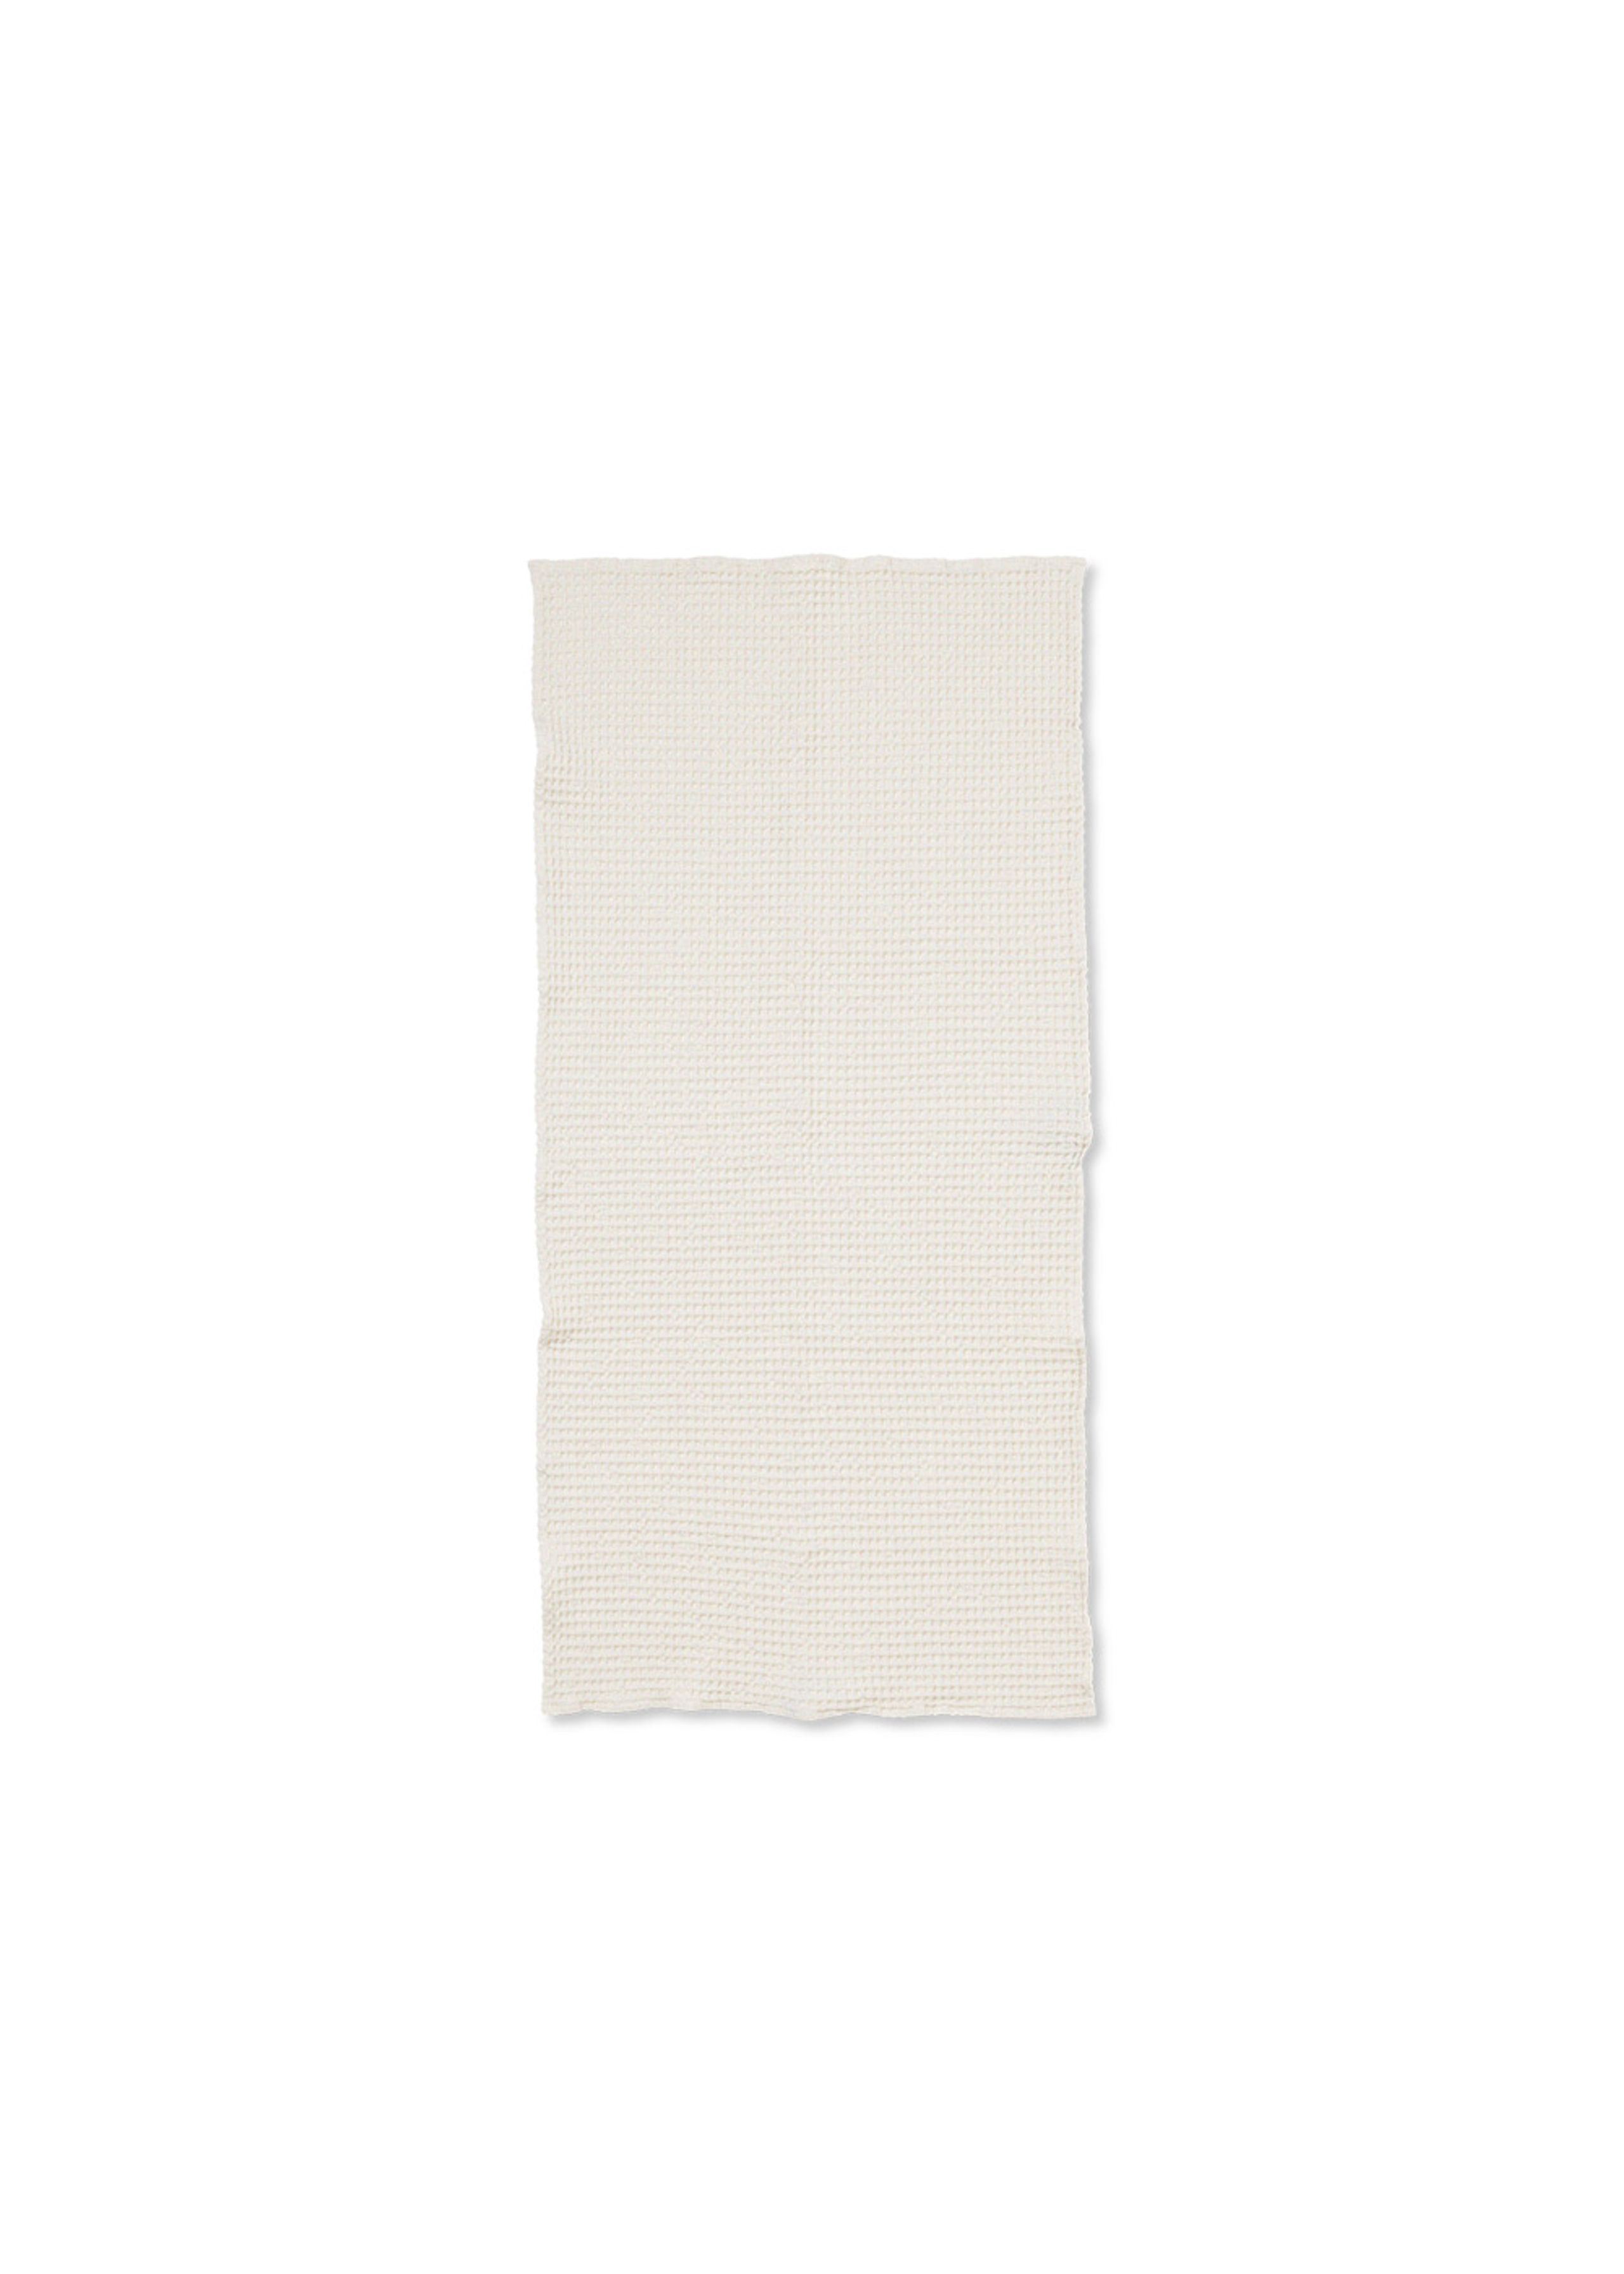 Ferm Living - Toalha - Organic Hand Towel - White